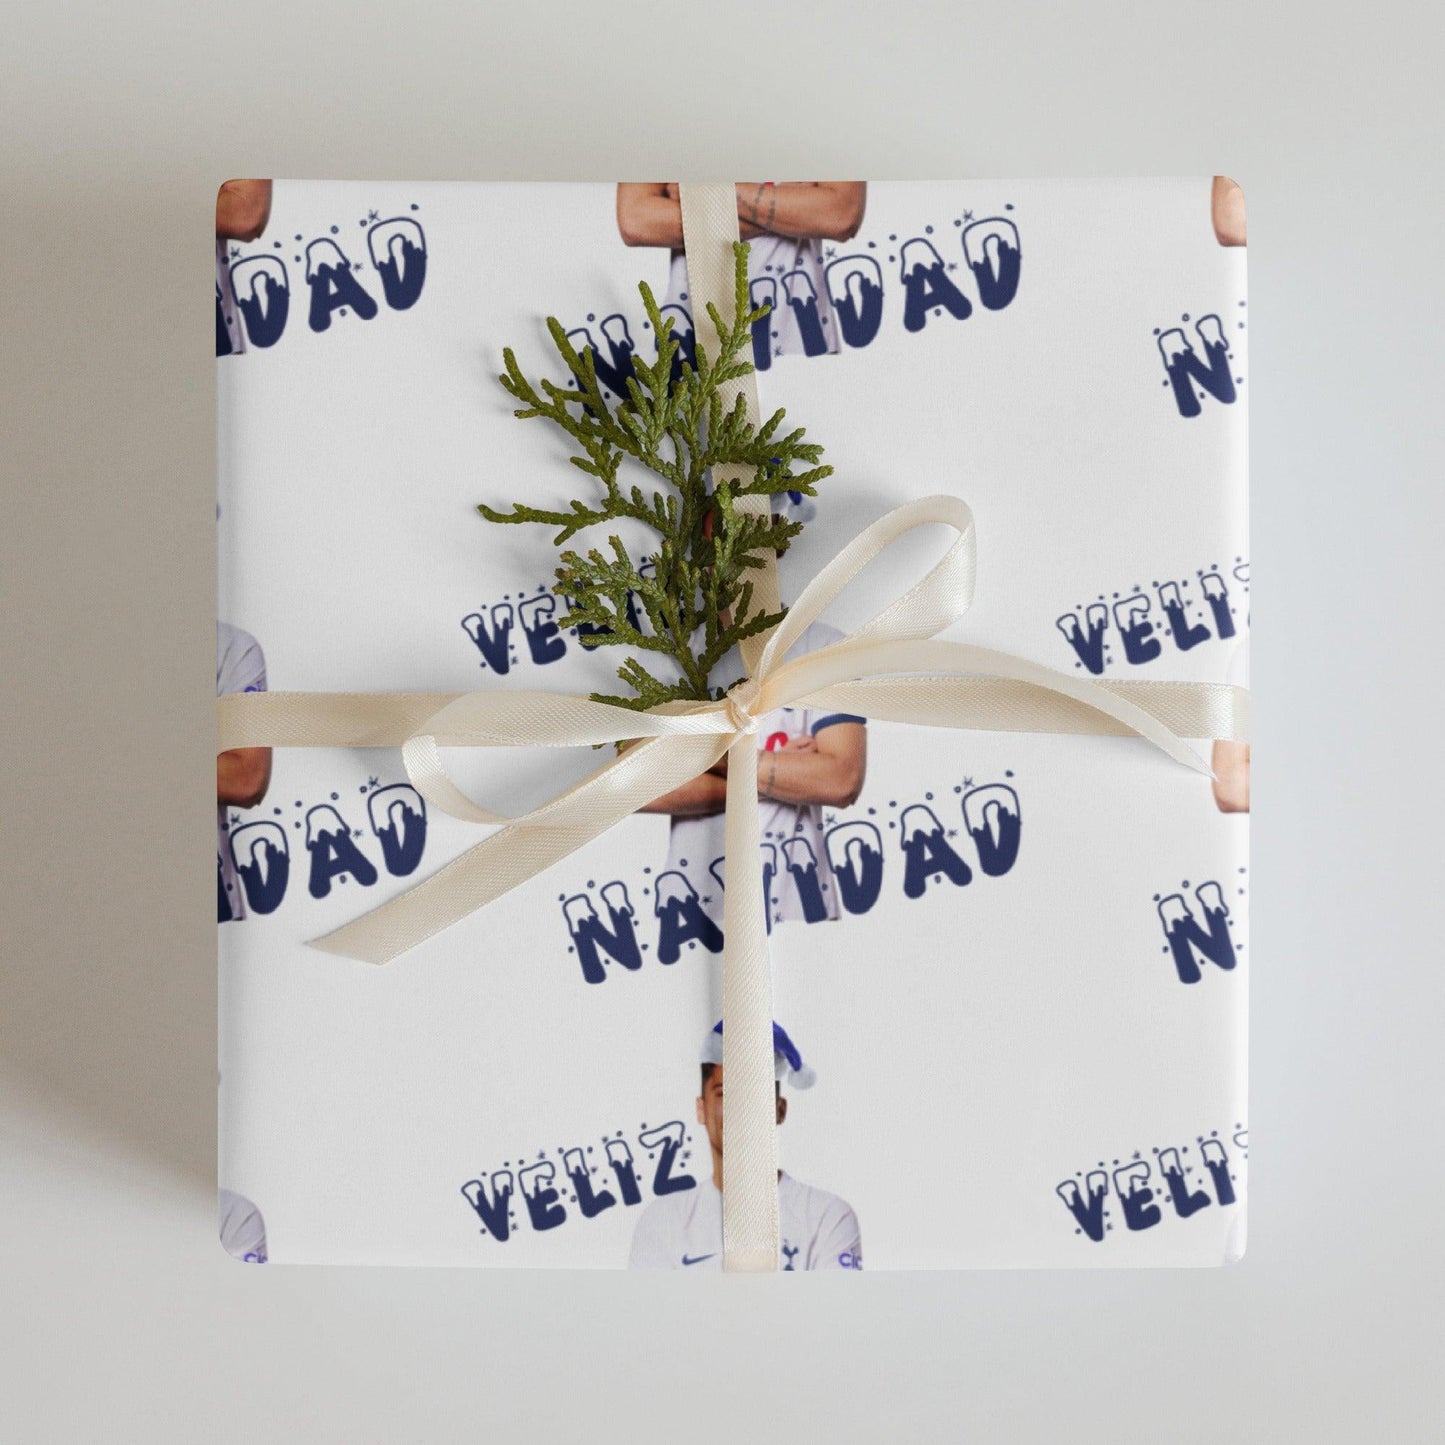 Veliz Navidad Wrapping paper - Game Yarns